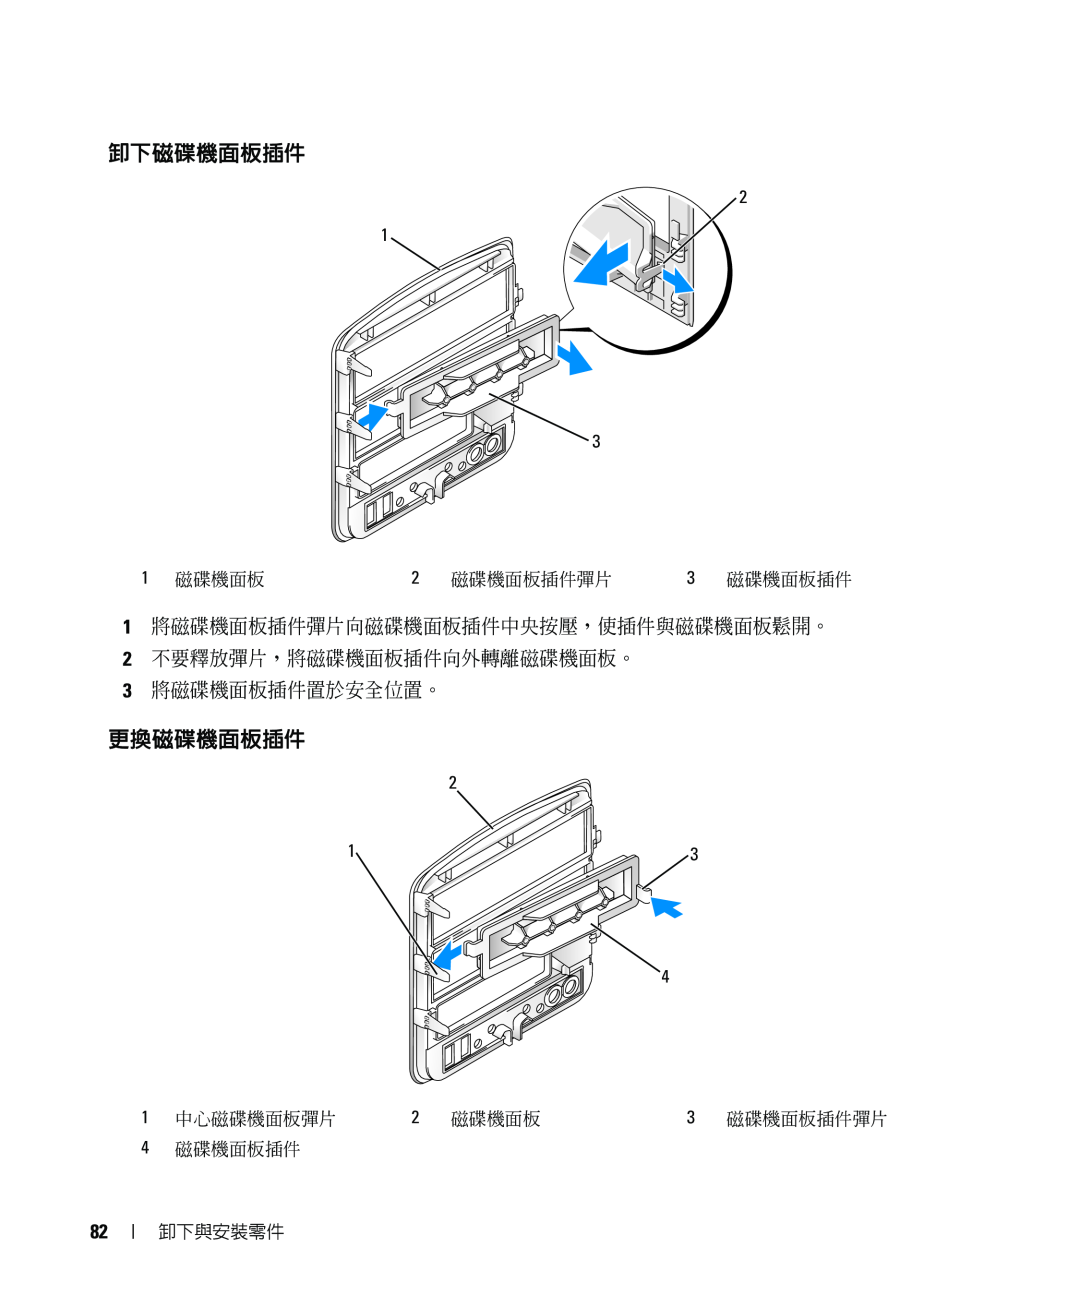 Dell E520 manual 卸下磁碟機面板插件, 更換磁碟機面板插件, 1 將磁碟機面板插件彈片向磁碟機面板插件中央按壓，使插件與磁碟機面板鬆開。 2 不要釋放彈片，將磁碟機面板插件向外轉離磁碟機面板。, 3 將磁碟機面板插件置於安全位置。 